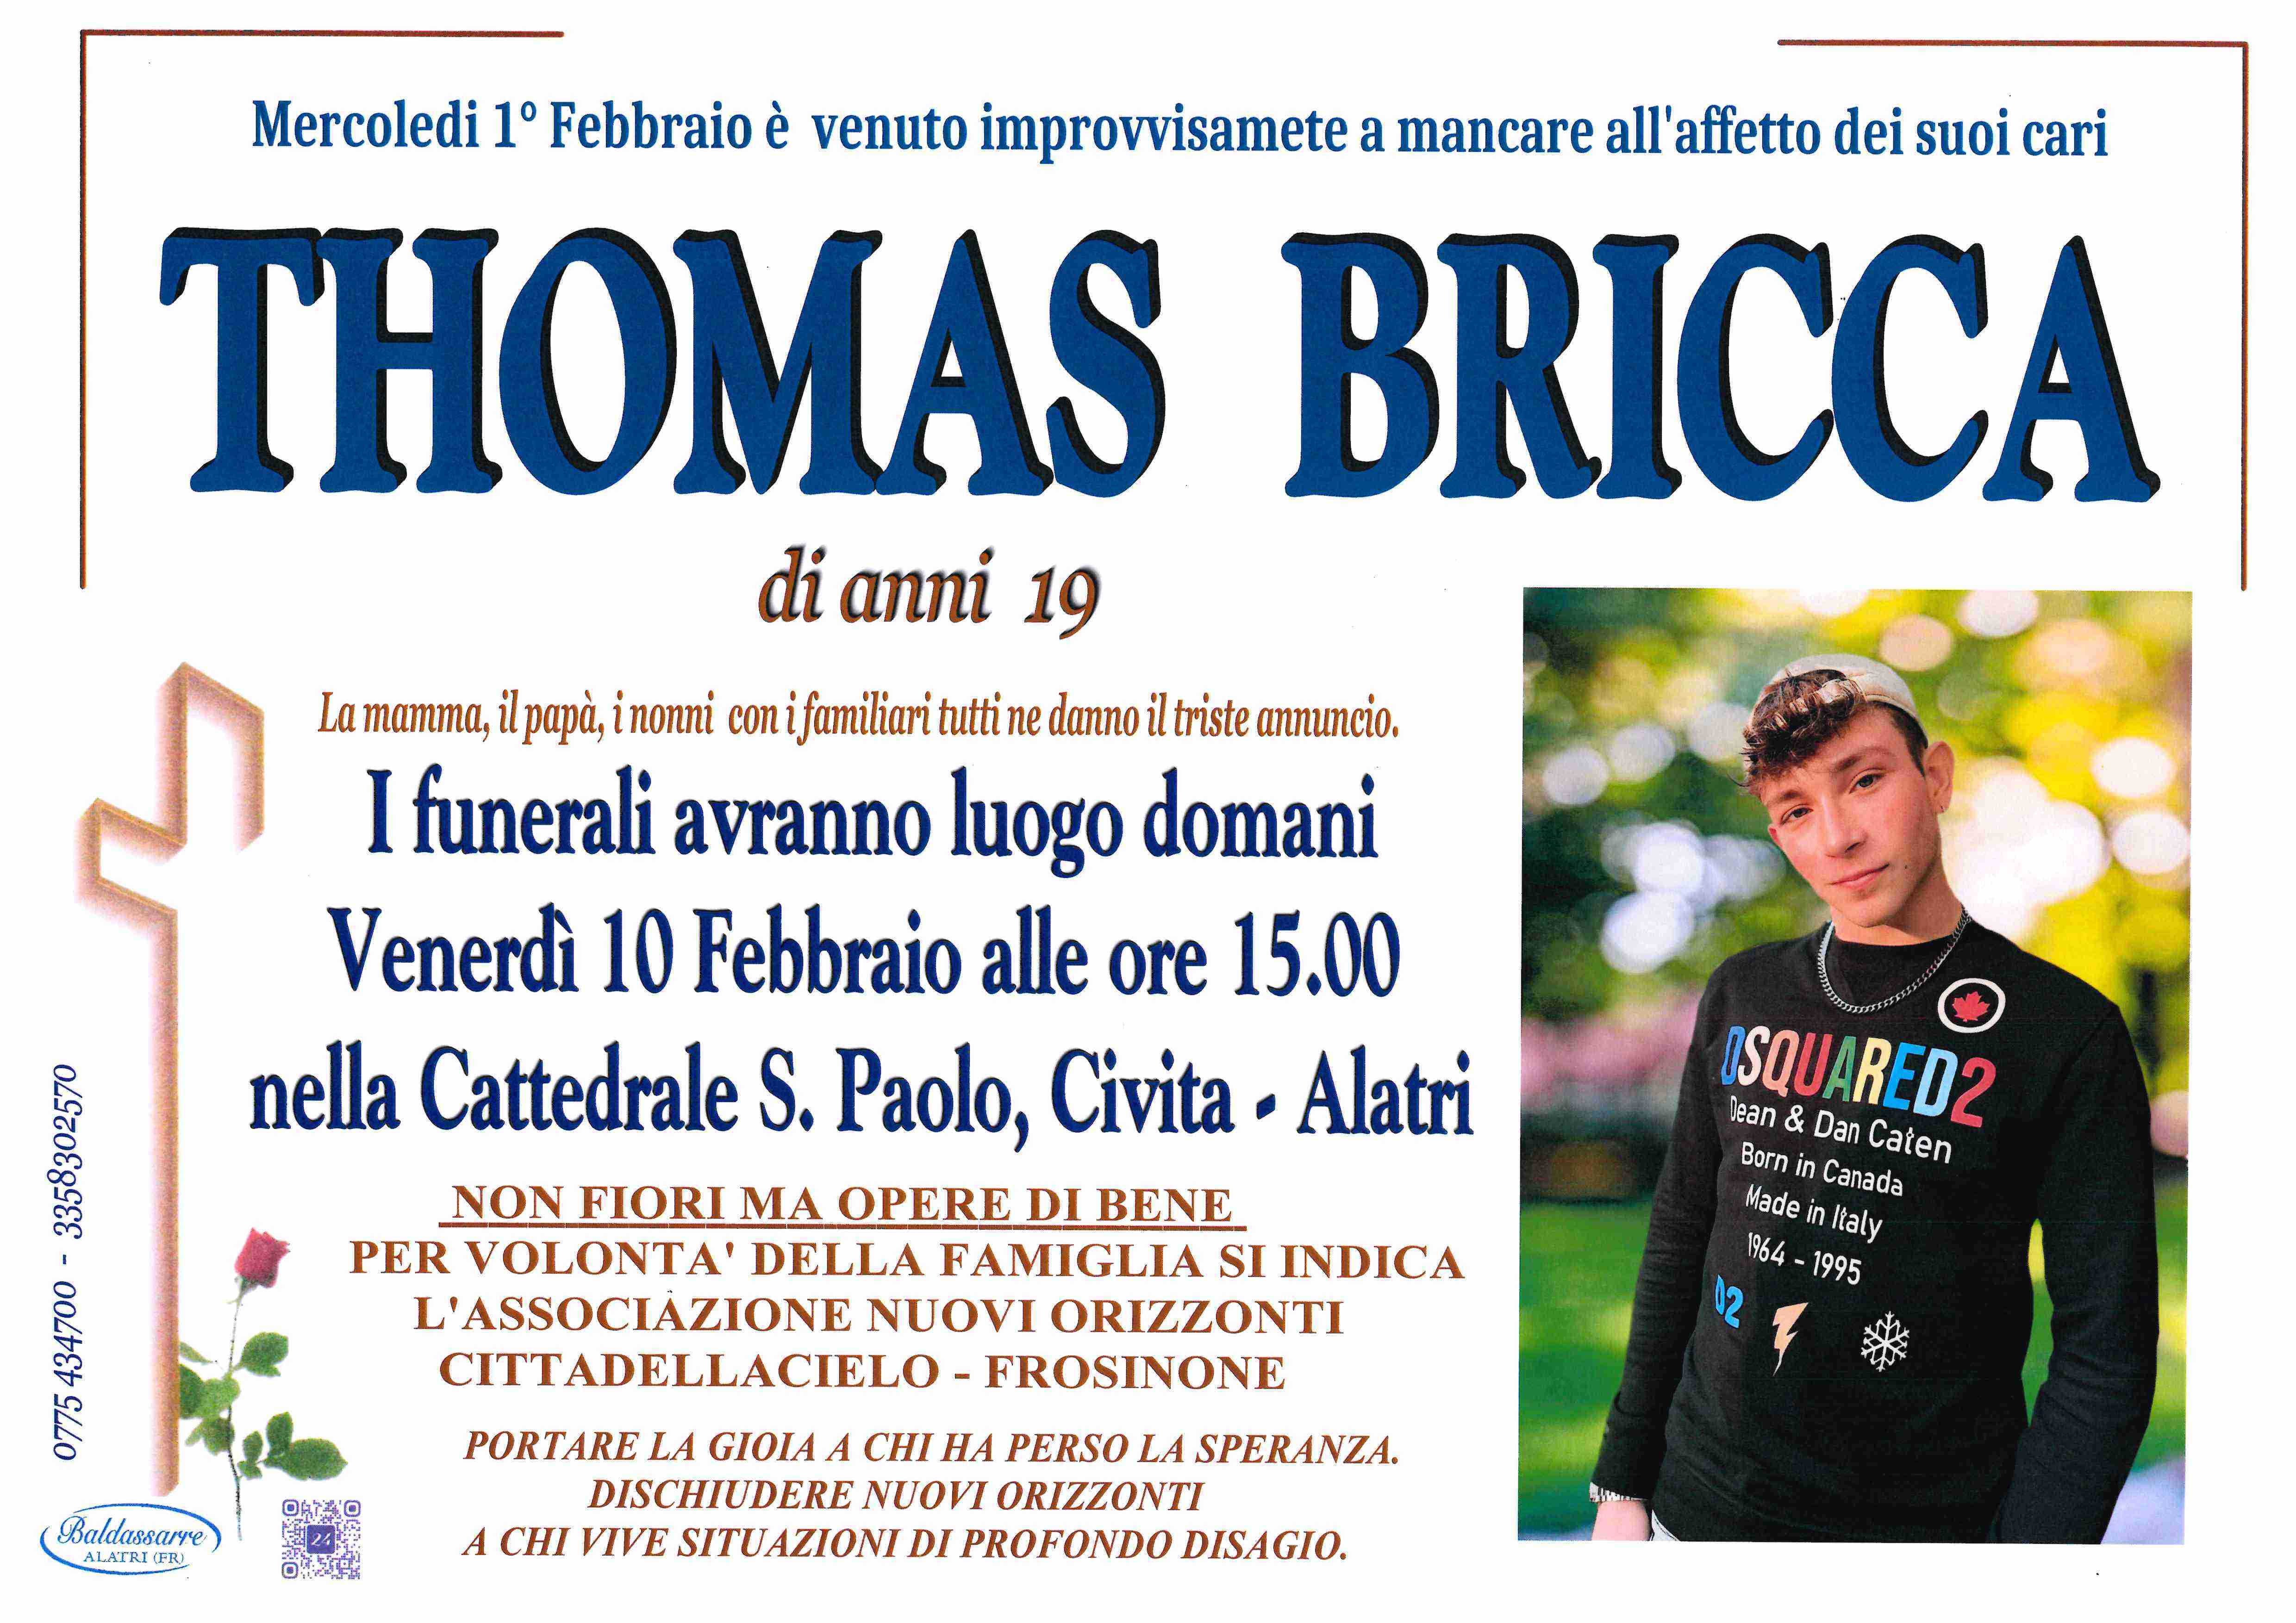 Thomas Bricca